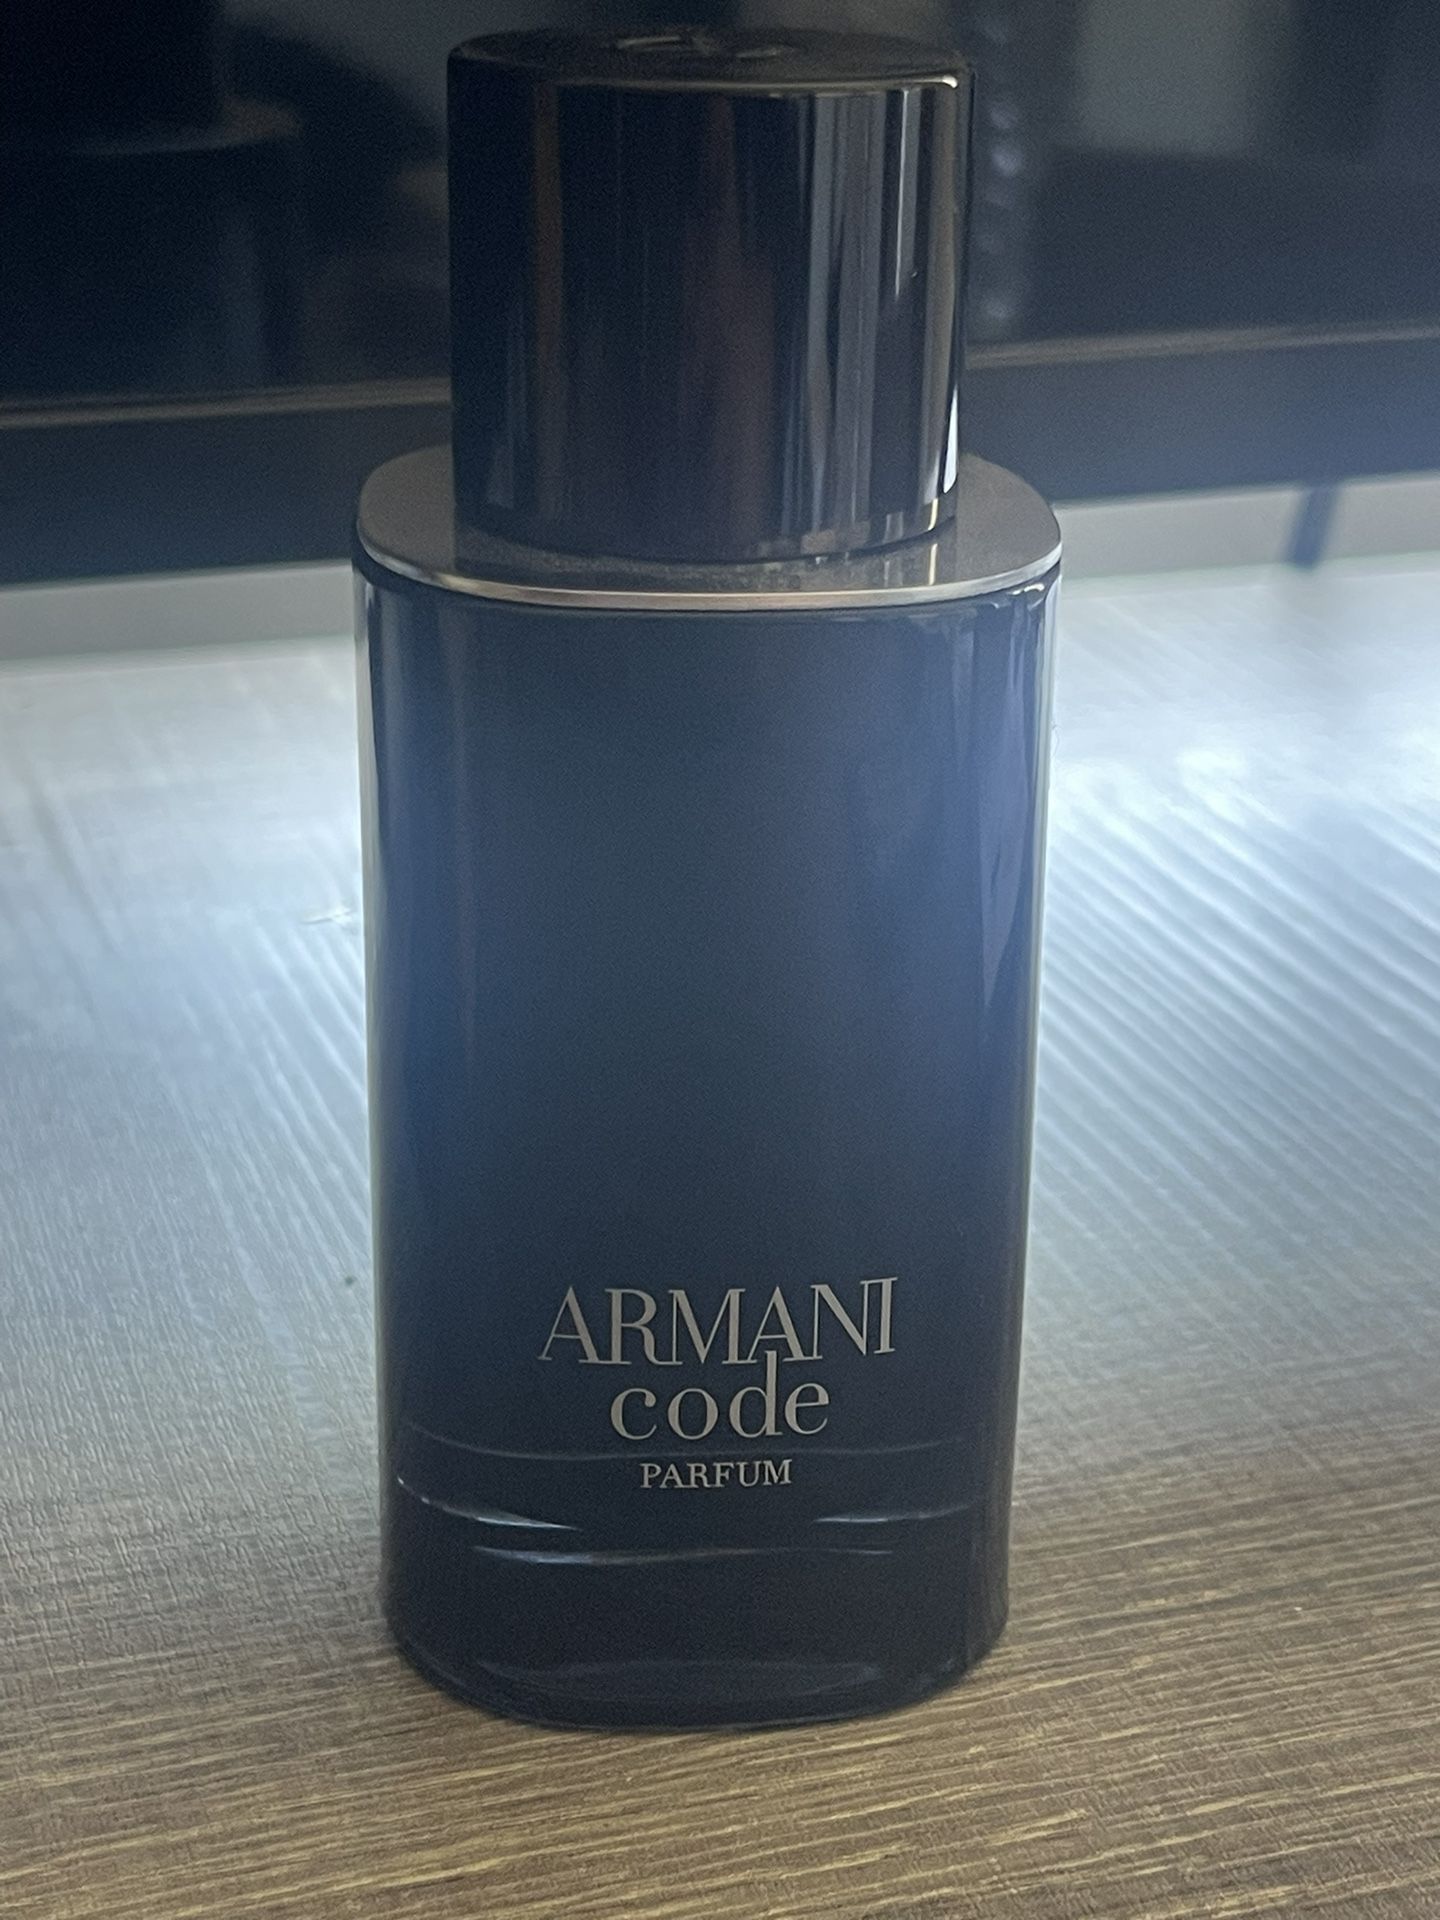 Armani code parfum 